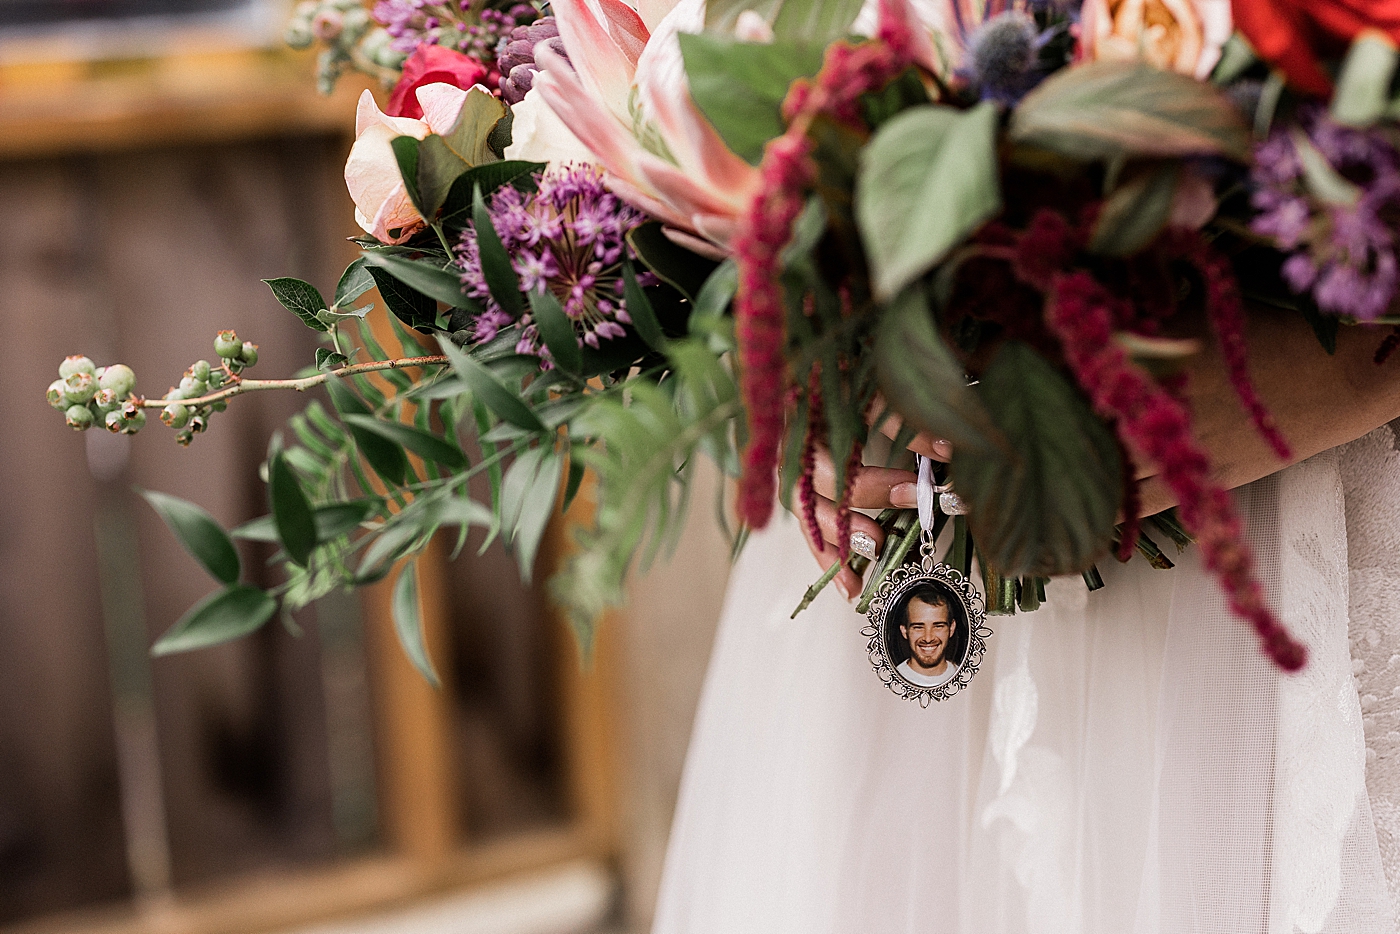 Wedding bouquet. Photo by Megan Montalvo Photography.